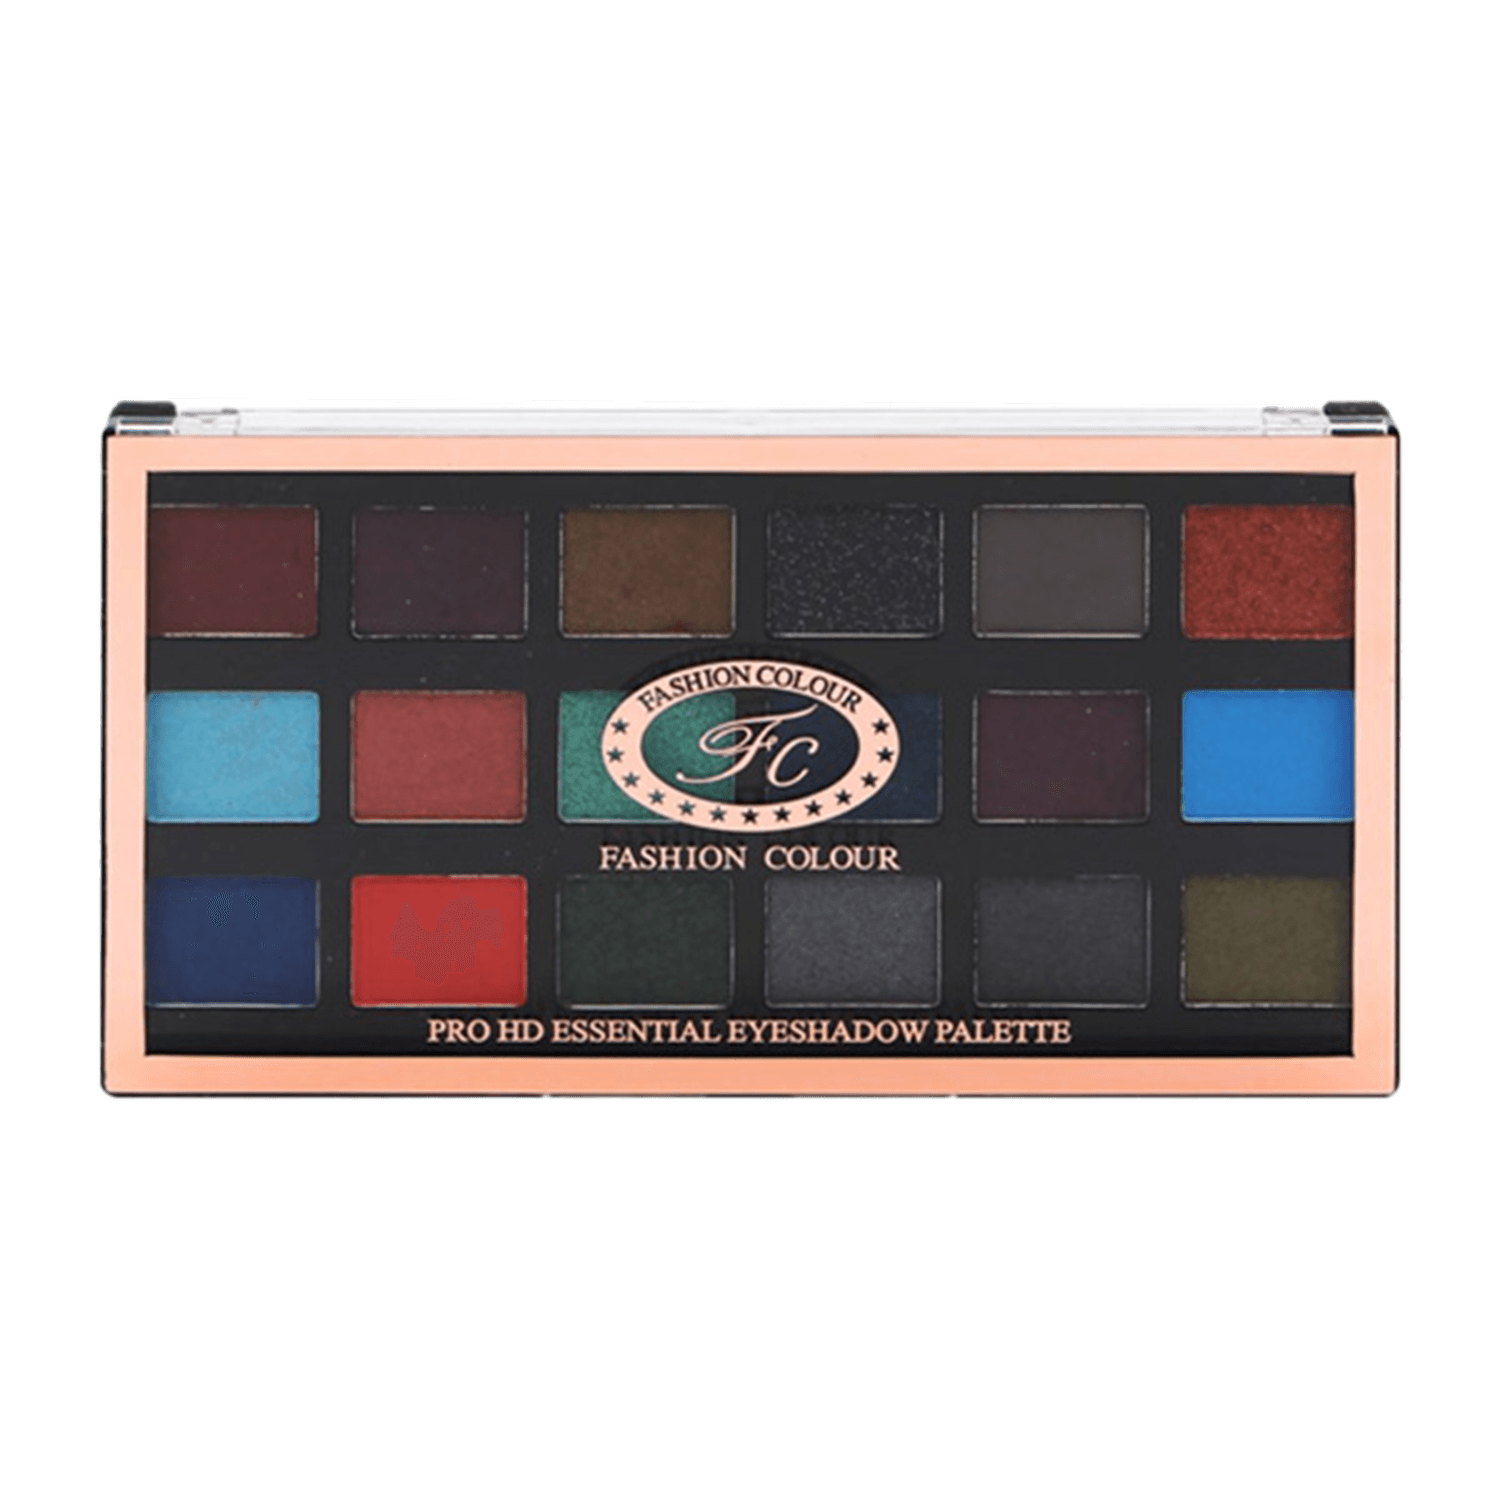 Fashion Colour Pro HD Eyeshadow Palette - 03 Shade (14g)